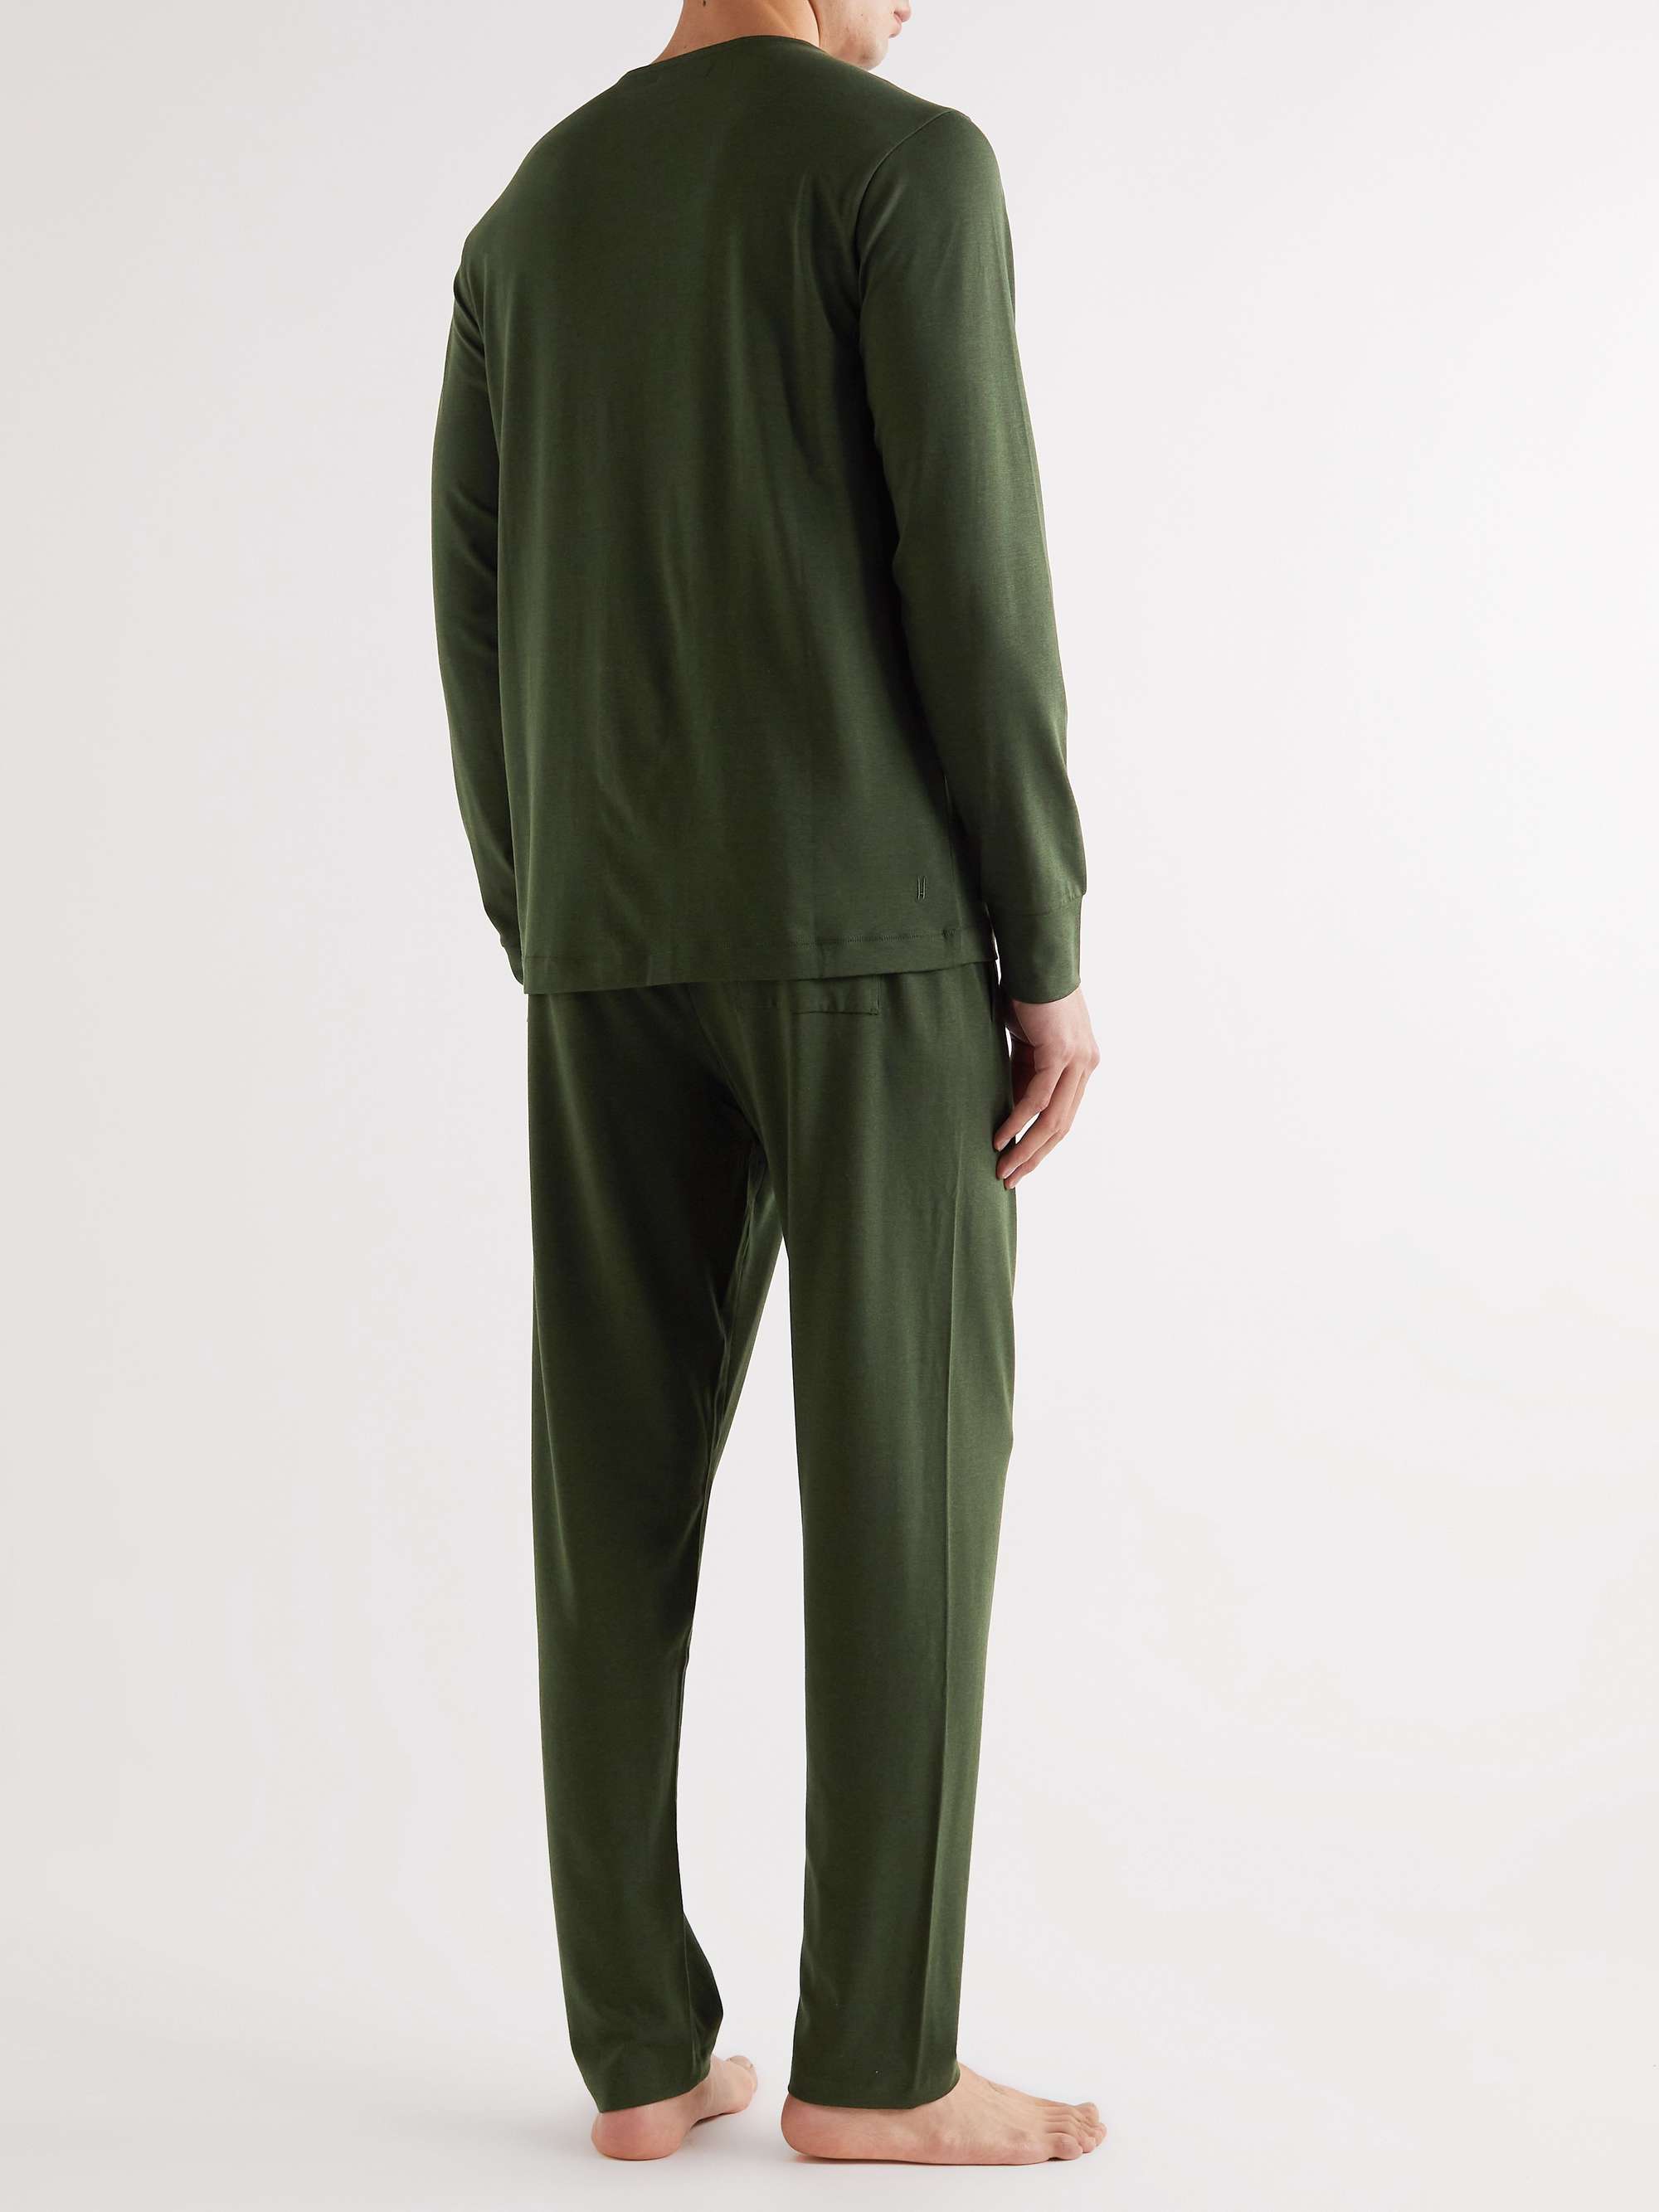 HAMILTON AND HARE Stretch Lyocell and Cotton-Blend Pyjama Set